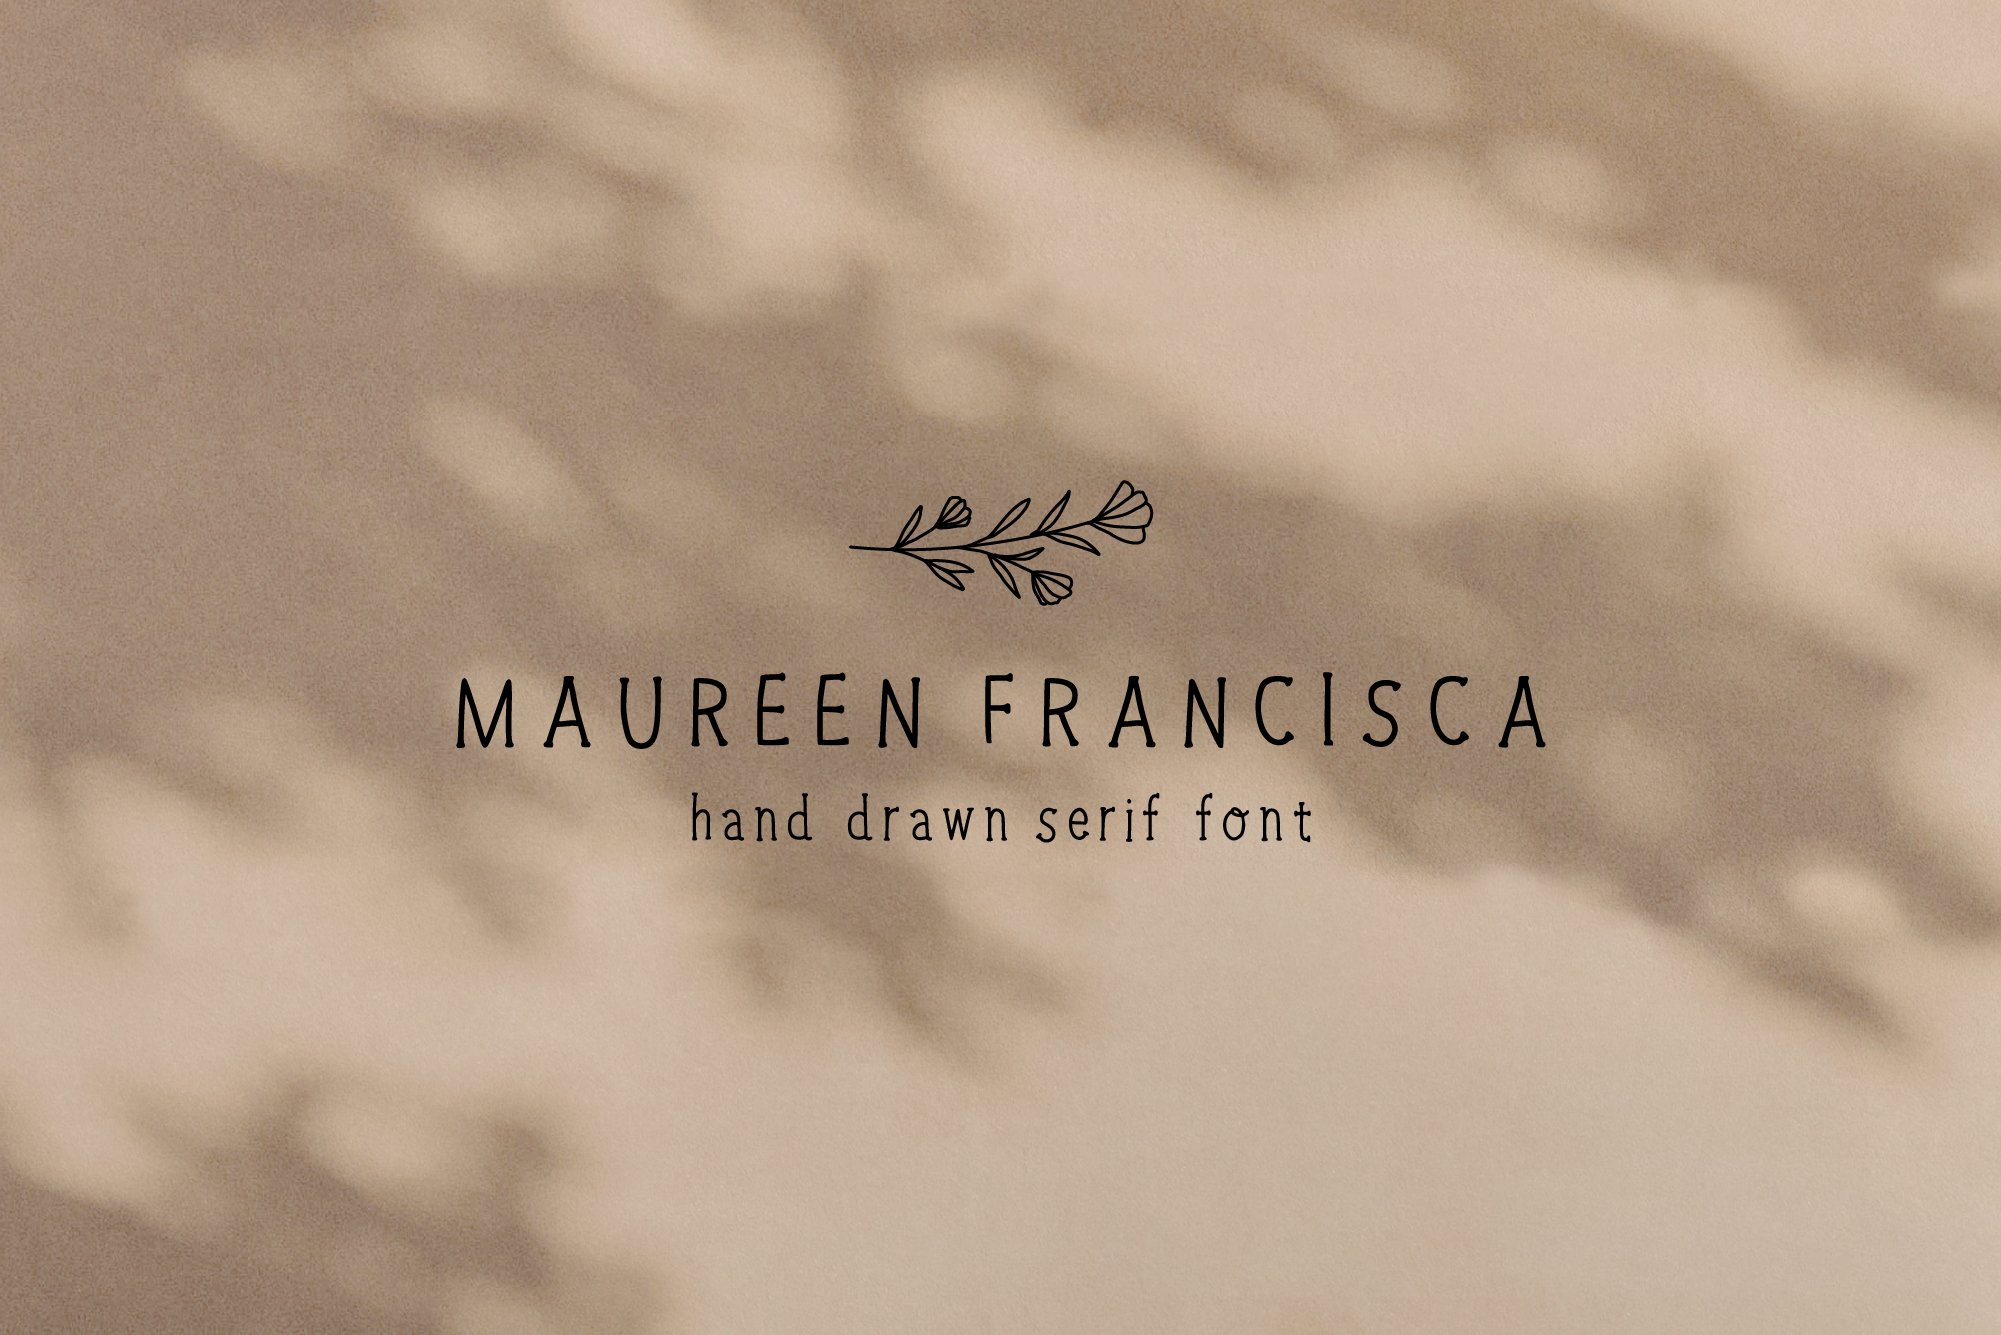 Hand Drawn Serif Font + Illustration cover image.